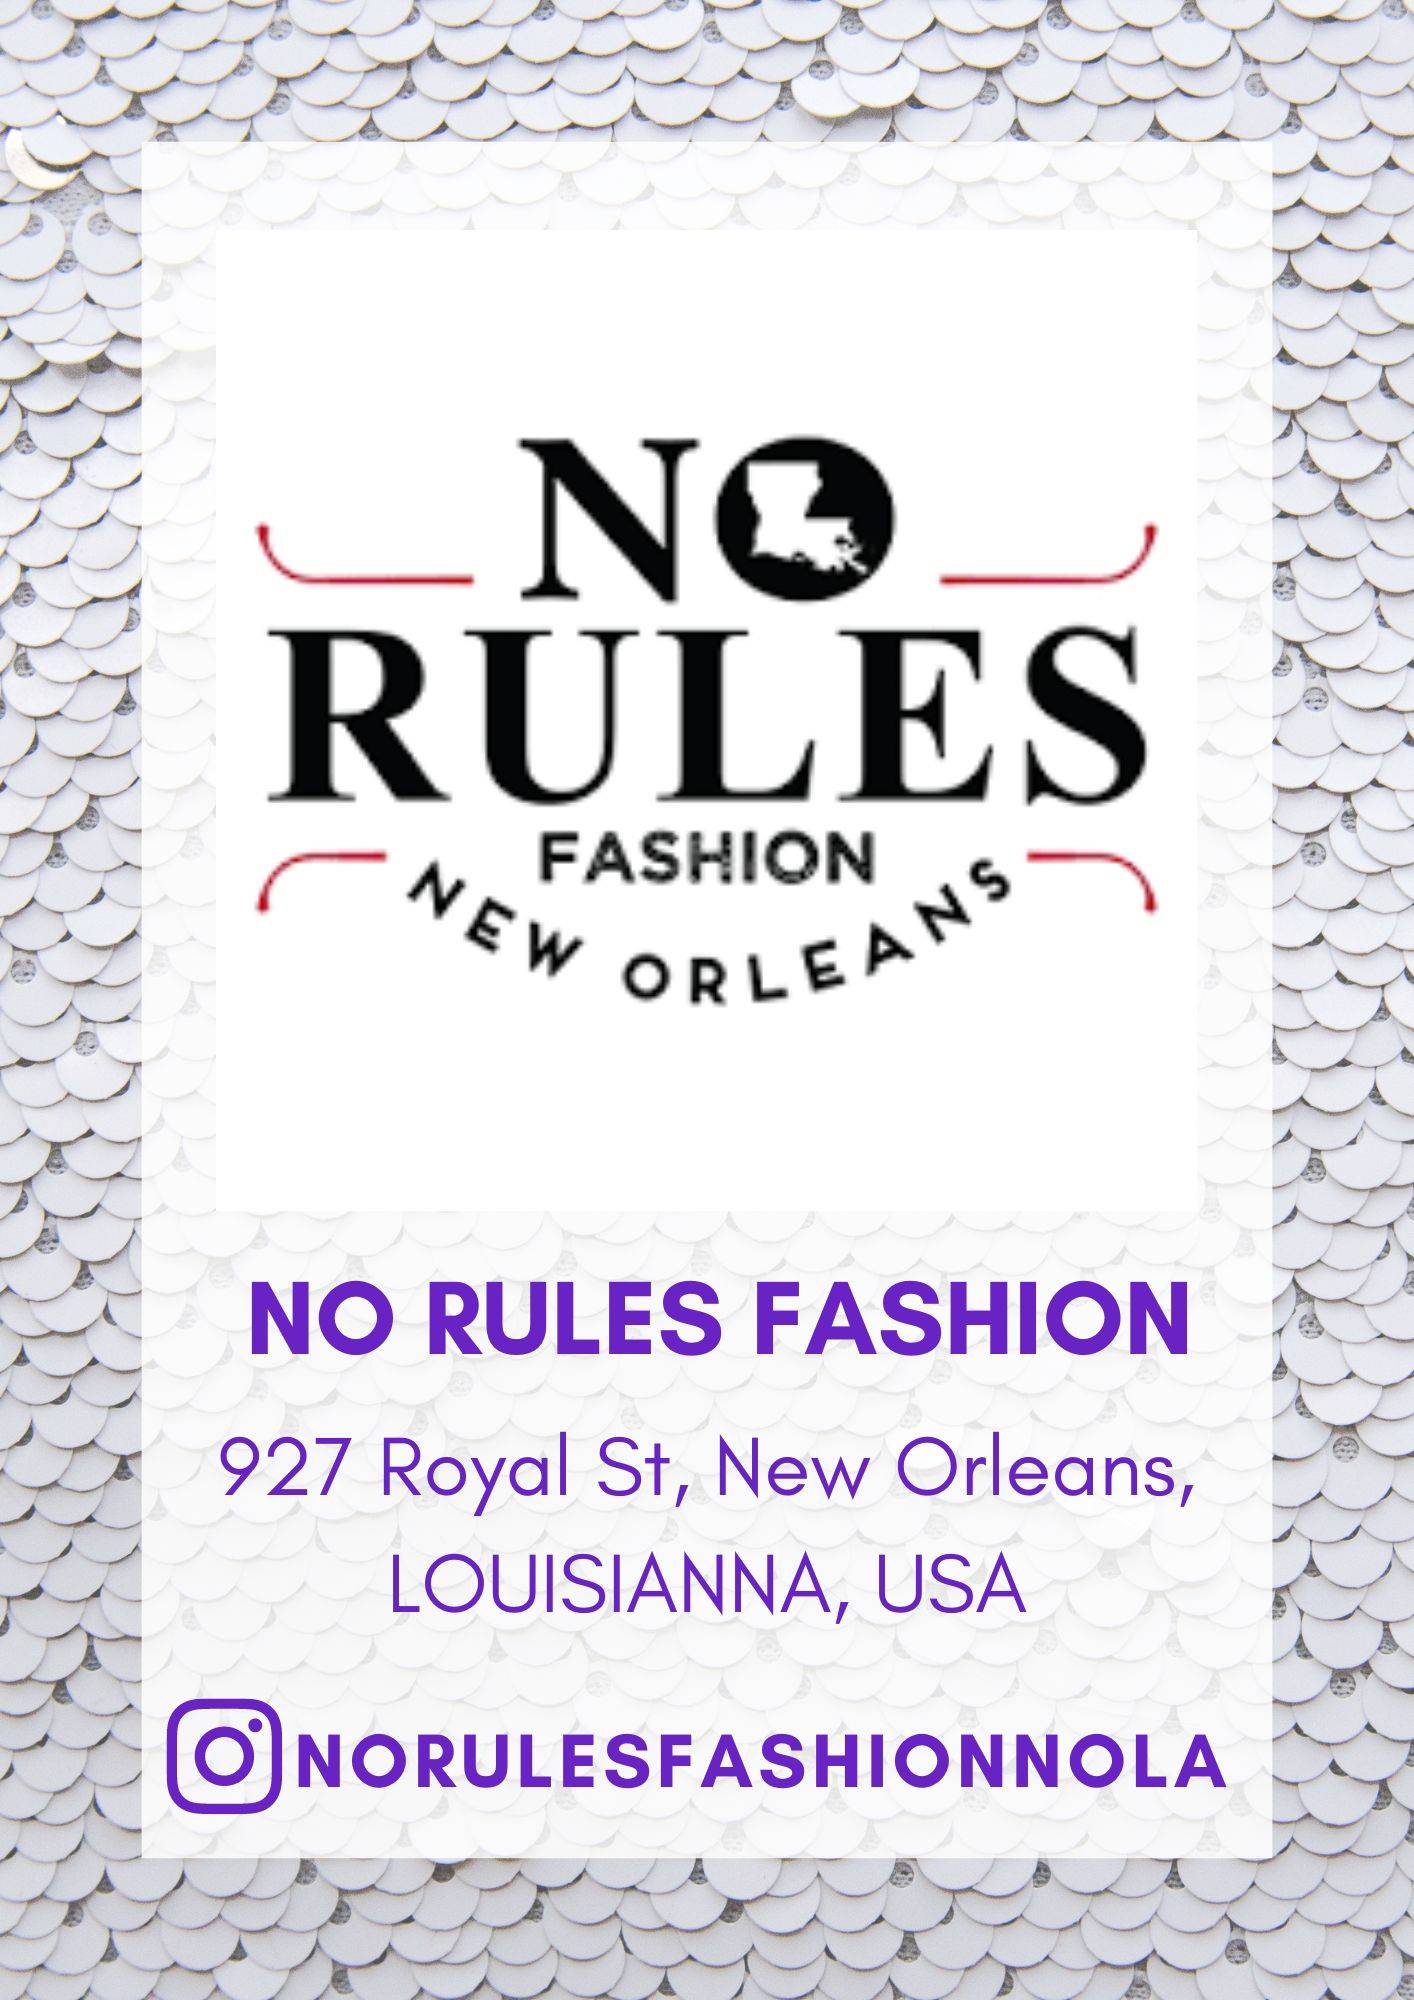 No Rules Fashion New Orleans Sea Dragon Studio Holographic Festival Clothing Retail Partner